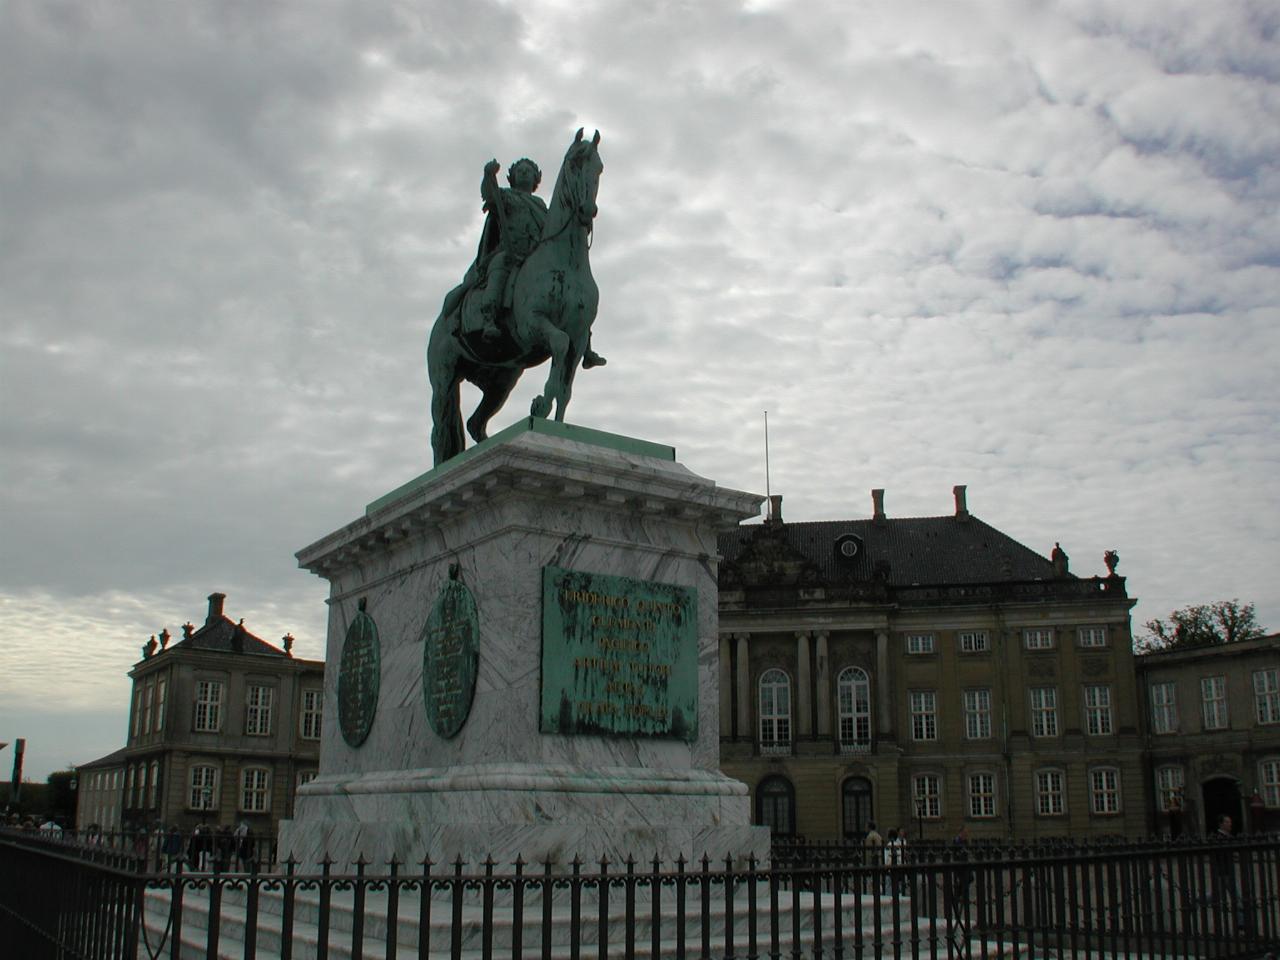 KPLU Viking Jazz: Amalienborg Plads (Plaza): Central statue of Fredrick V (Friderico Quinto)